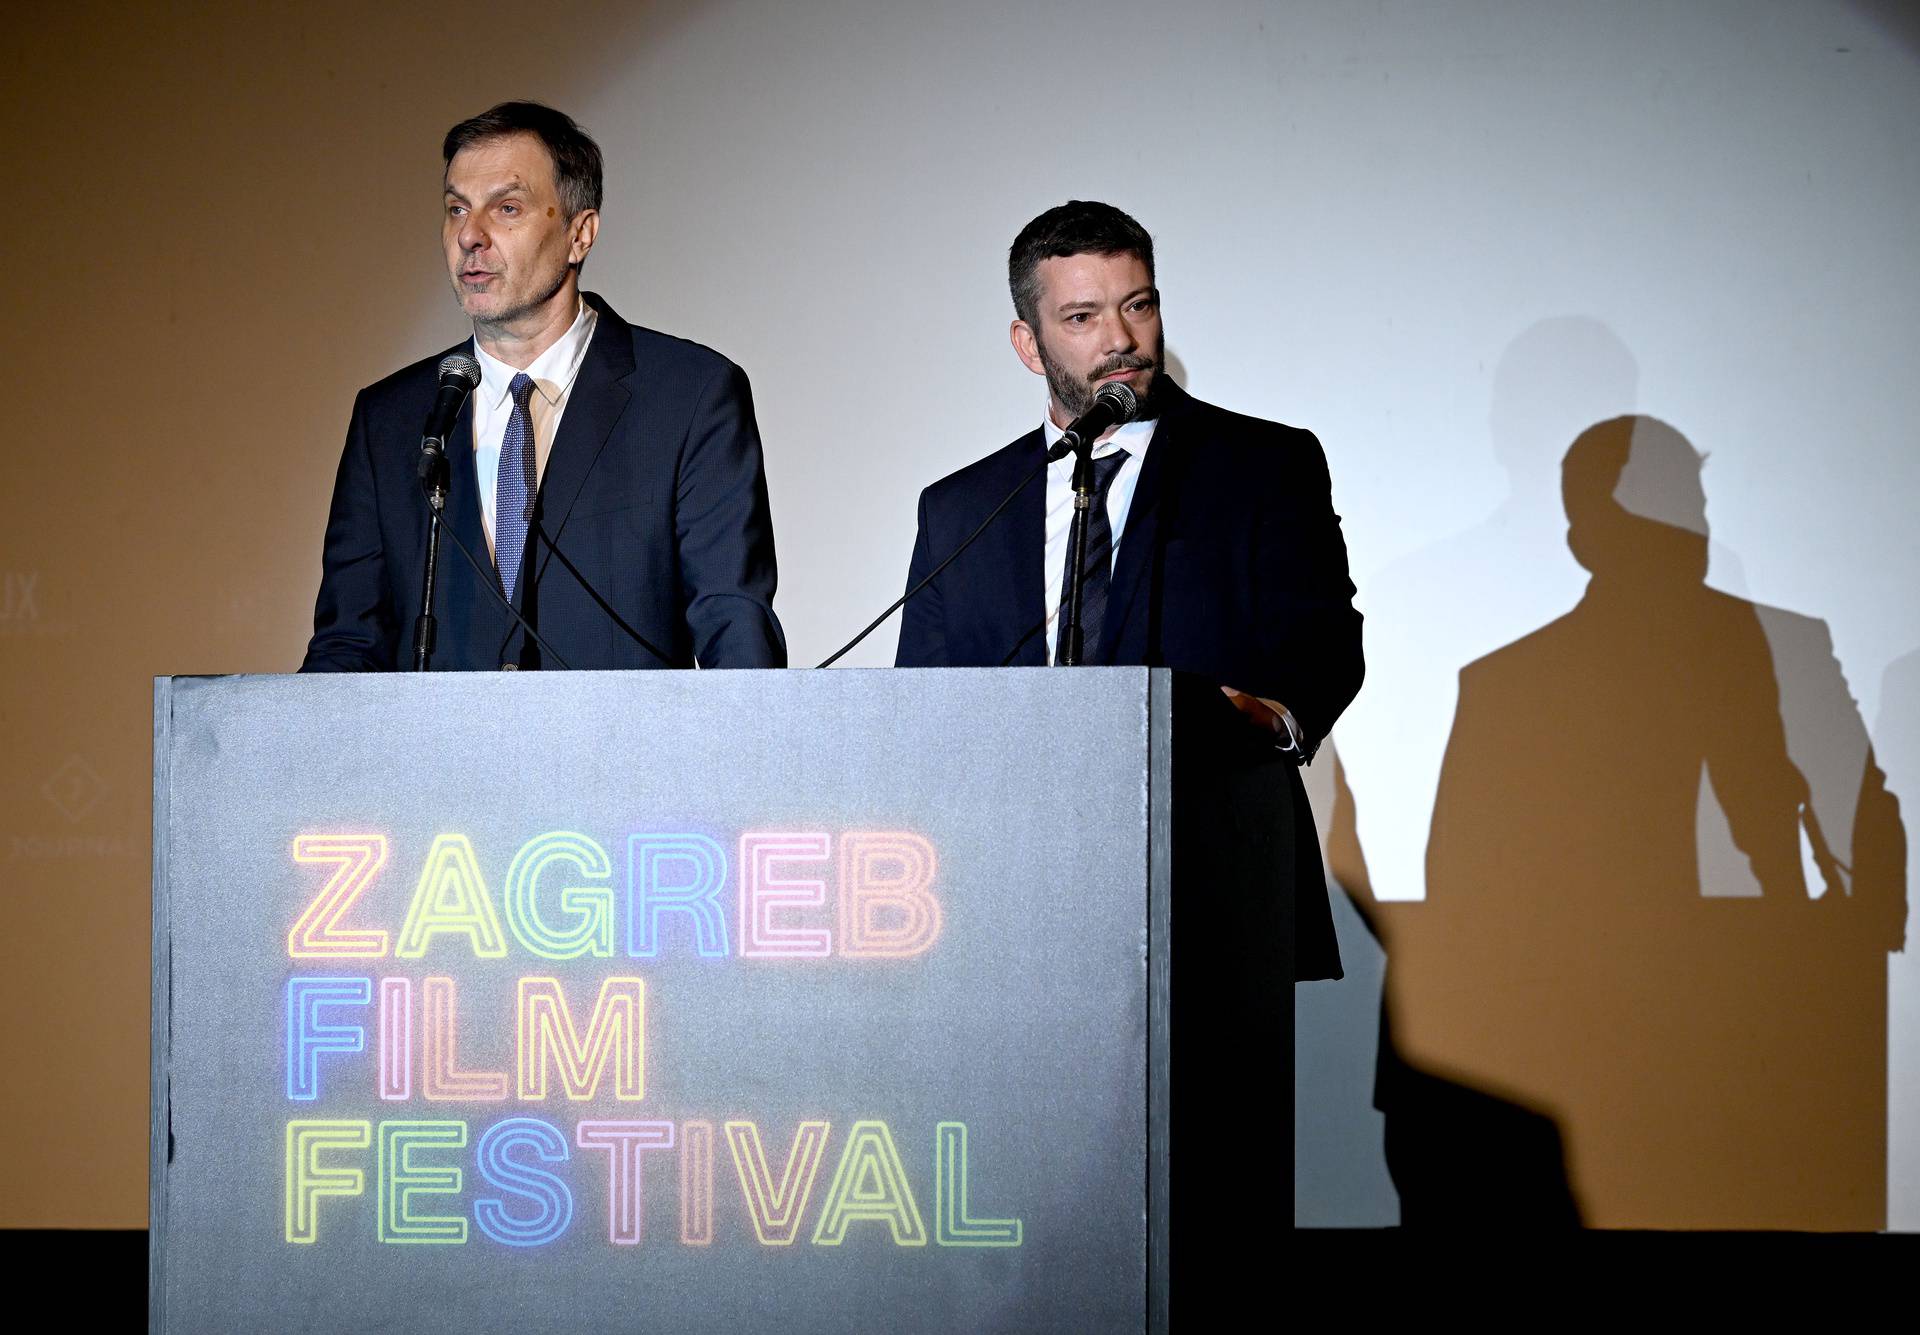 Otvorenje 20. Zagreb film festivala